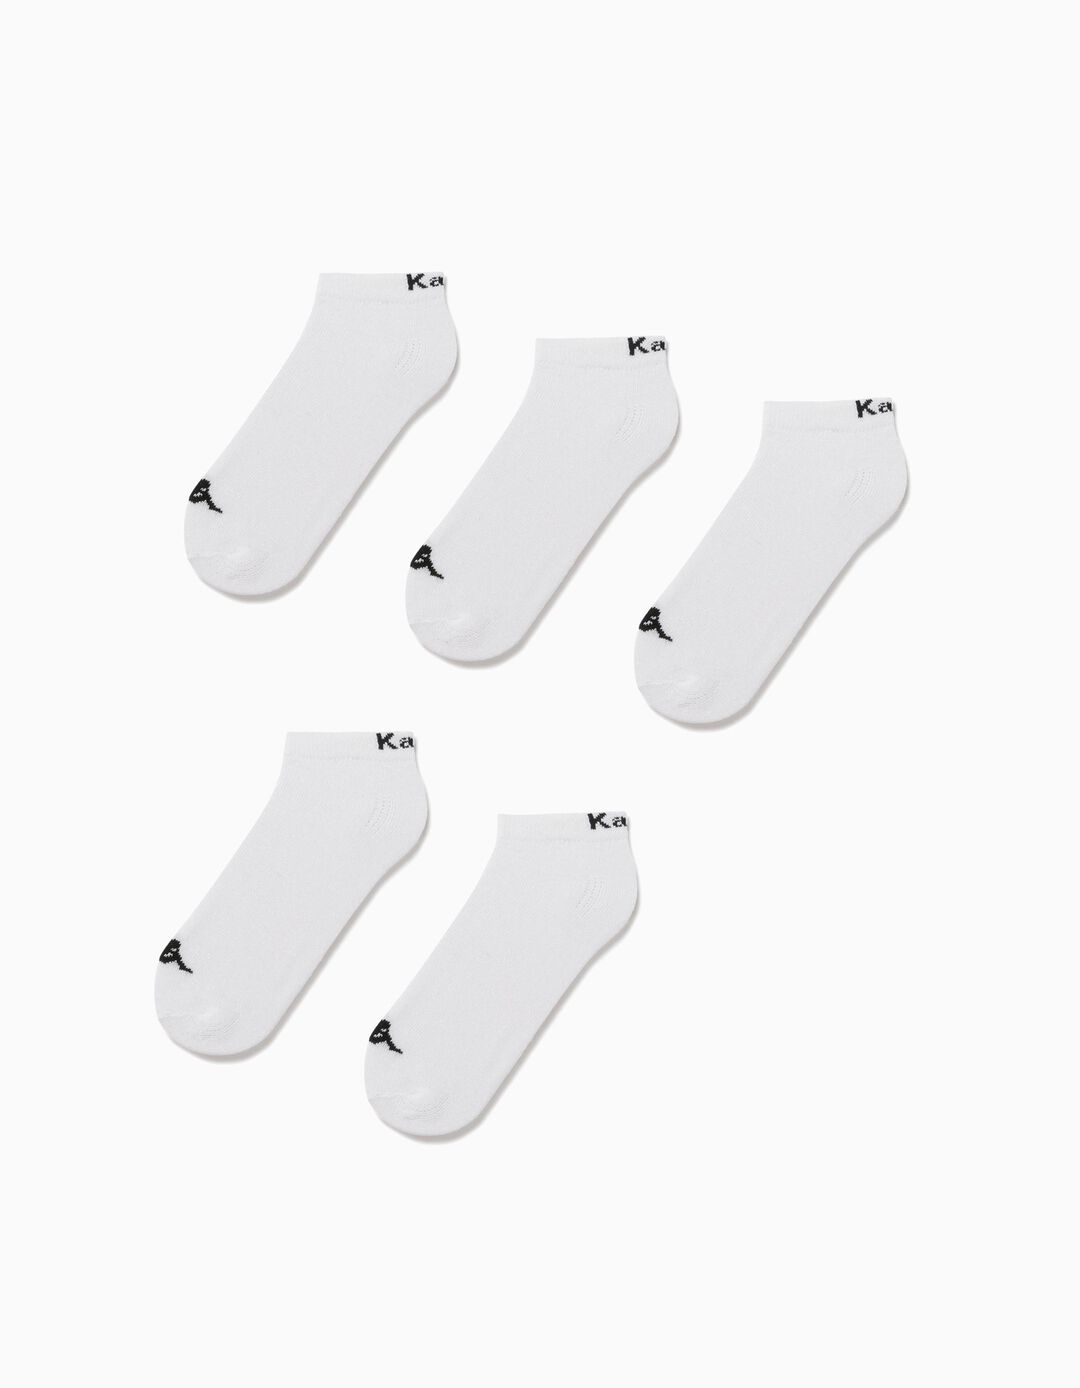 5 Pairs of 'Kappa' Ankle Socks